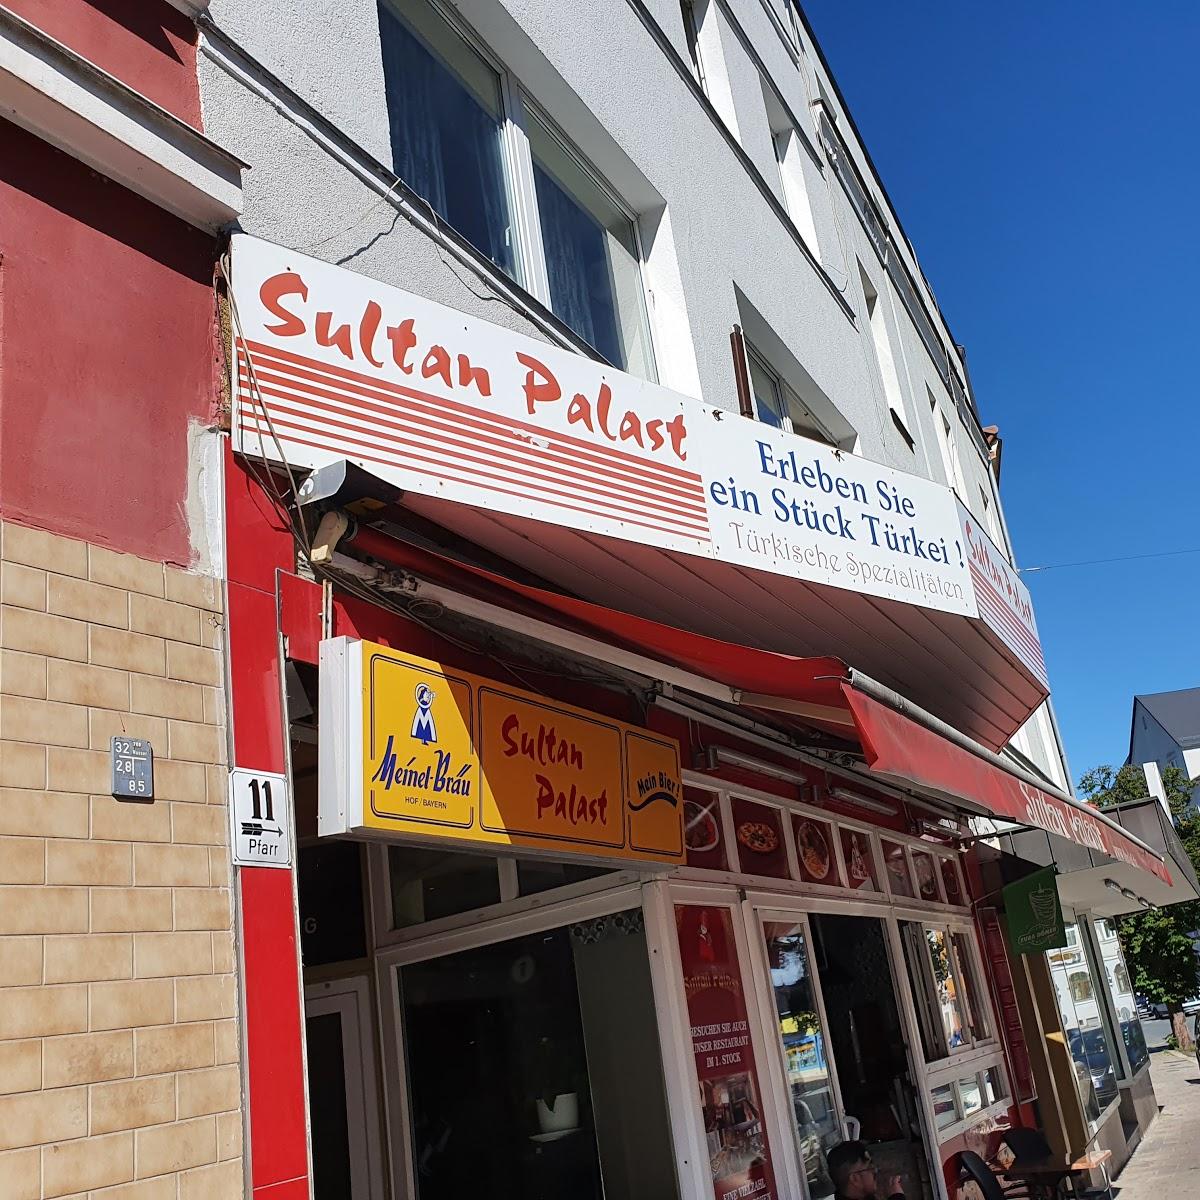 Restaurant "Sultan Palast" in Hof